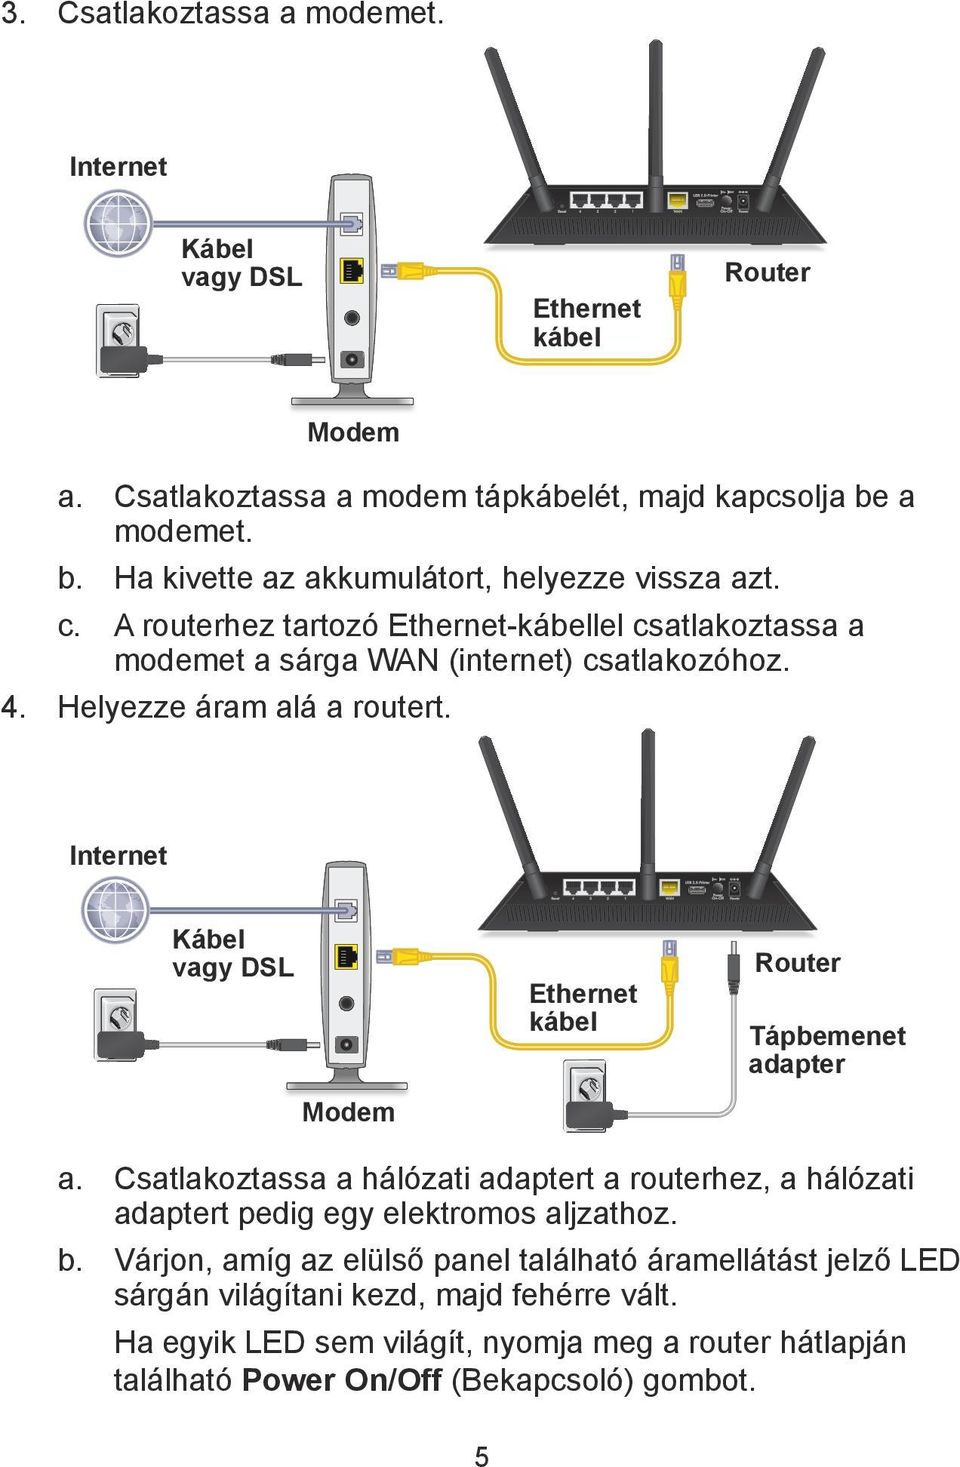 Gyorskalauz. AC1750 intelligens WiFi router R6400 modell - PDF Free Download